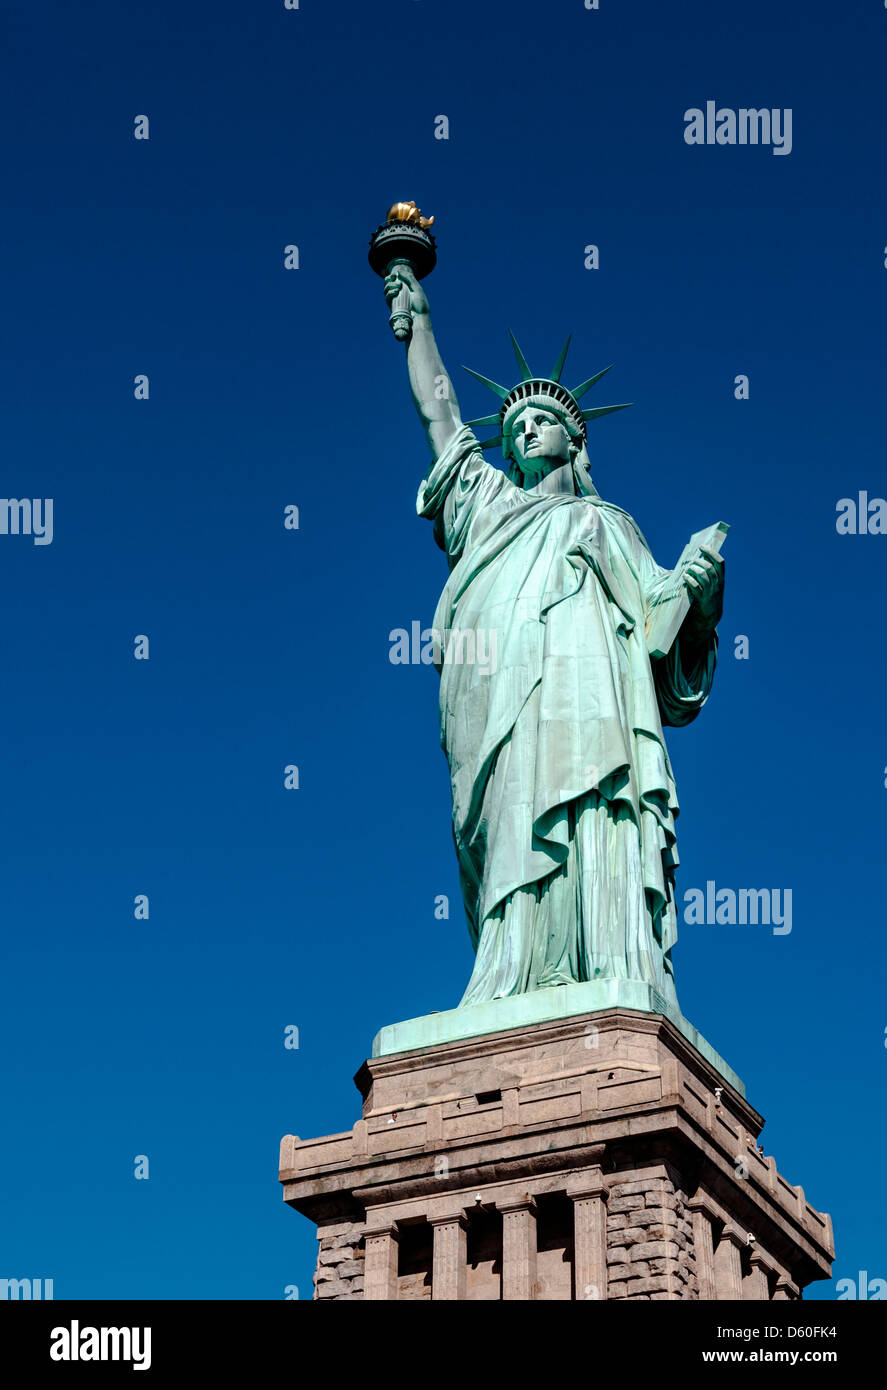 Statue de la liberté, Liberty Island, New York City, New York, États-Unis d'Amérique, USA Banque D'Images